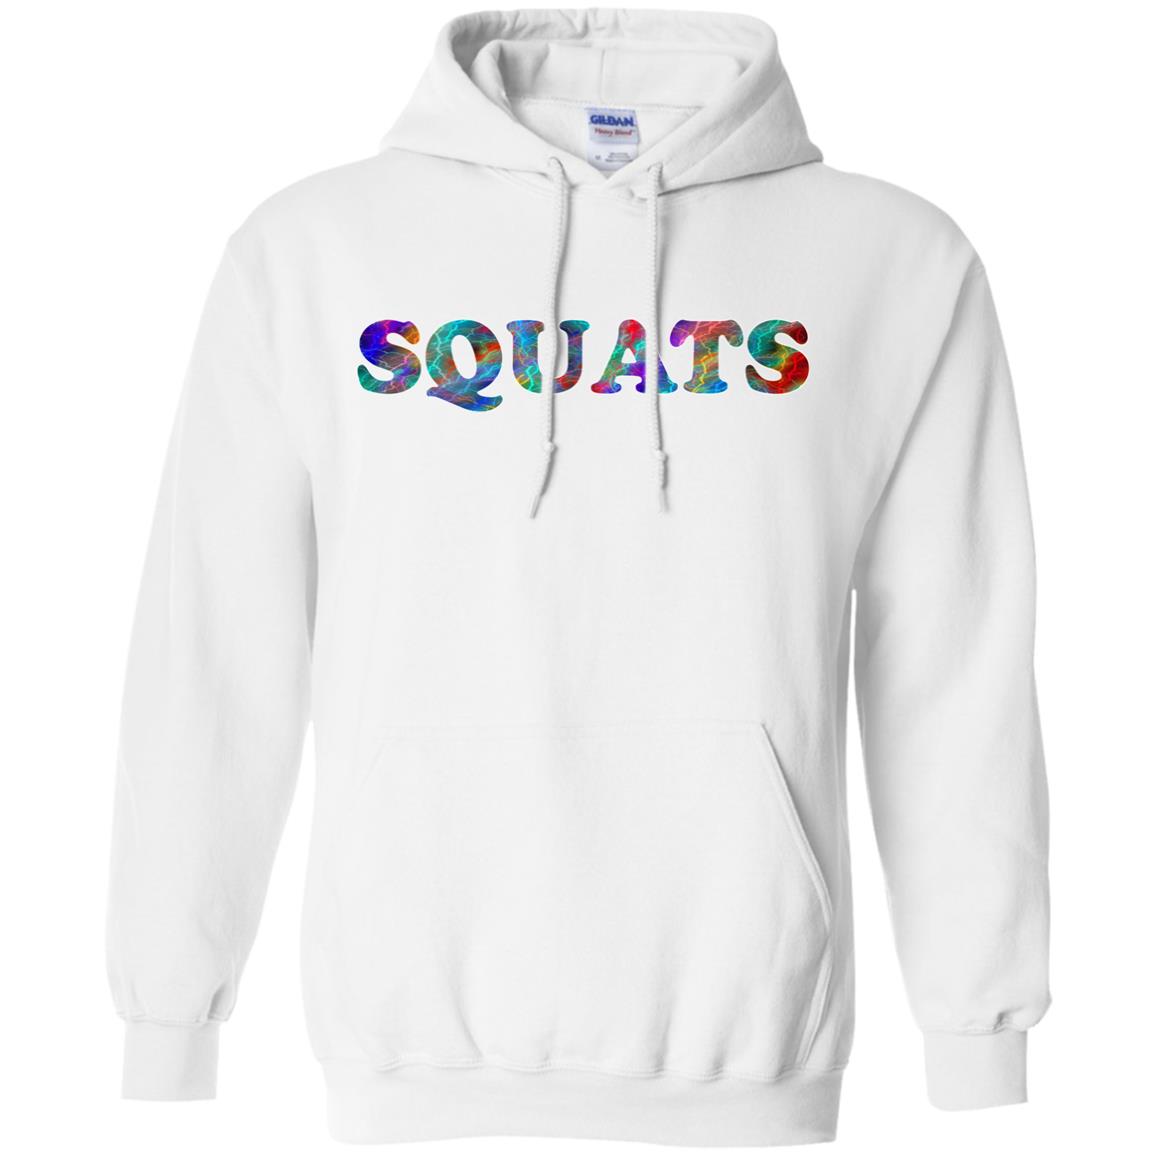 Squats Sport Hoodie